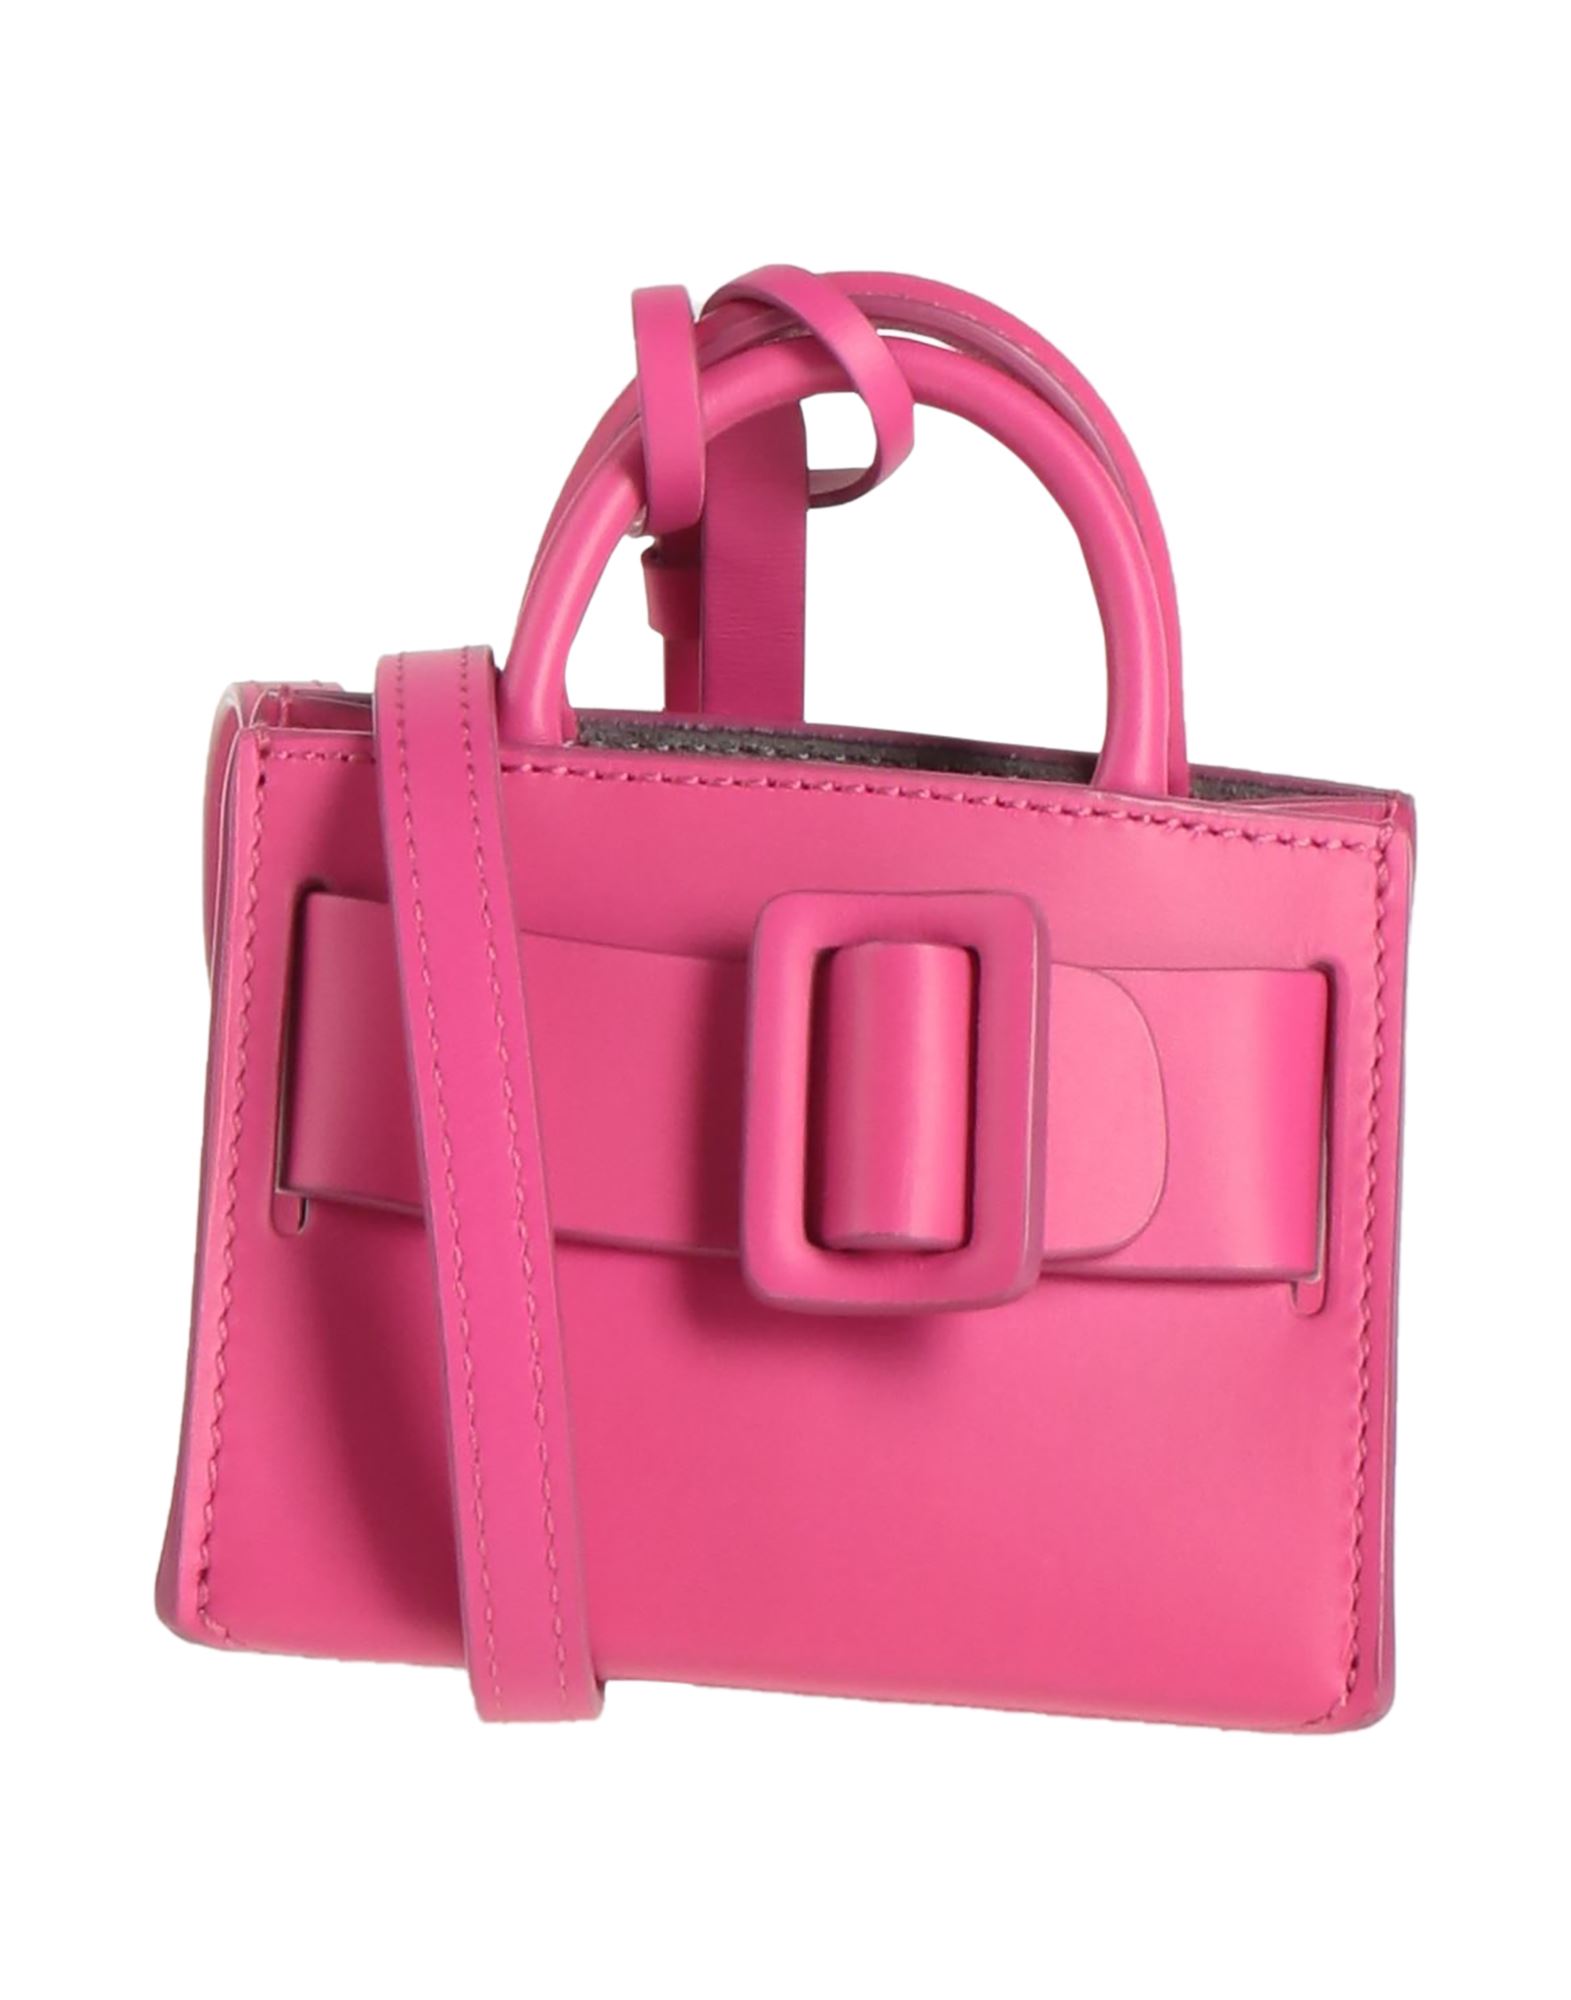 Boyy Handbags In Pink